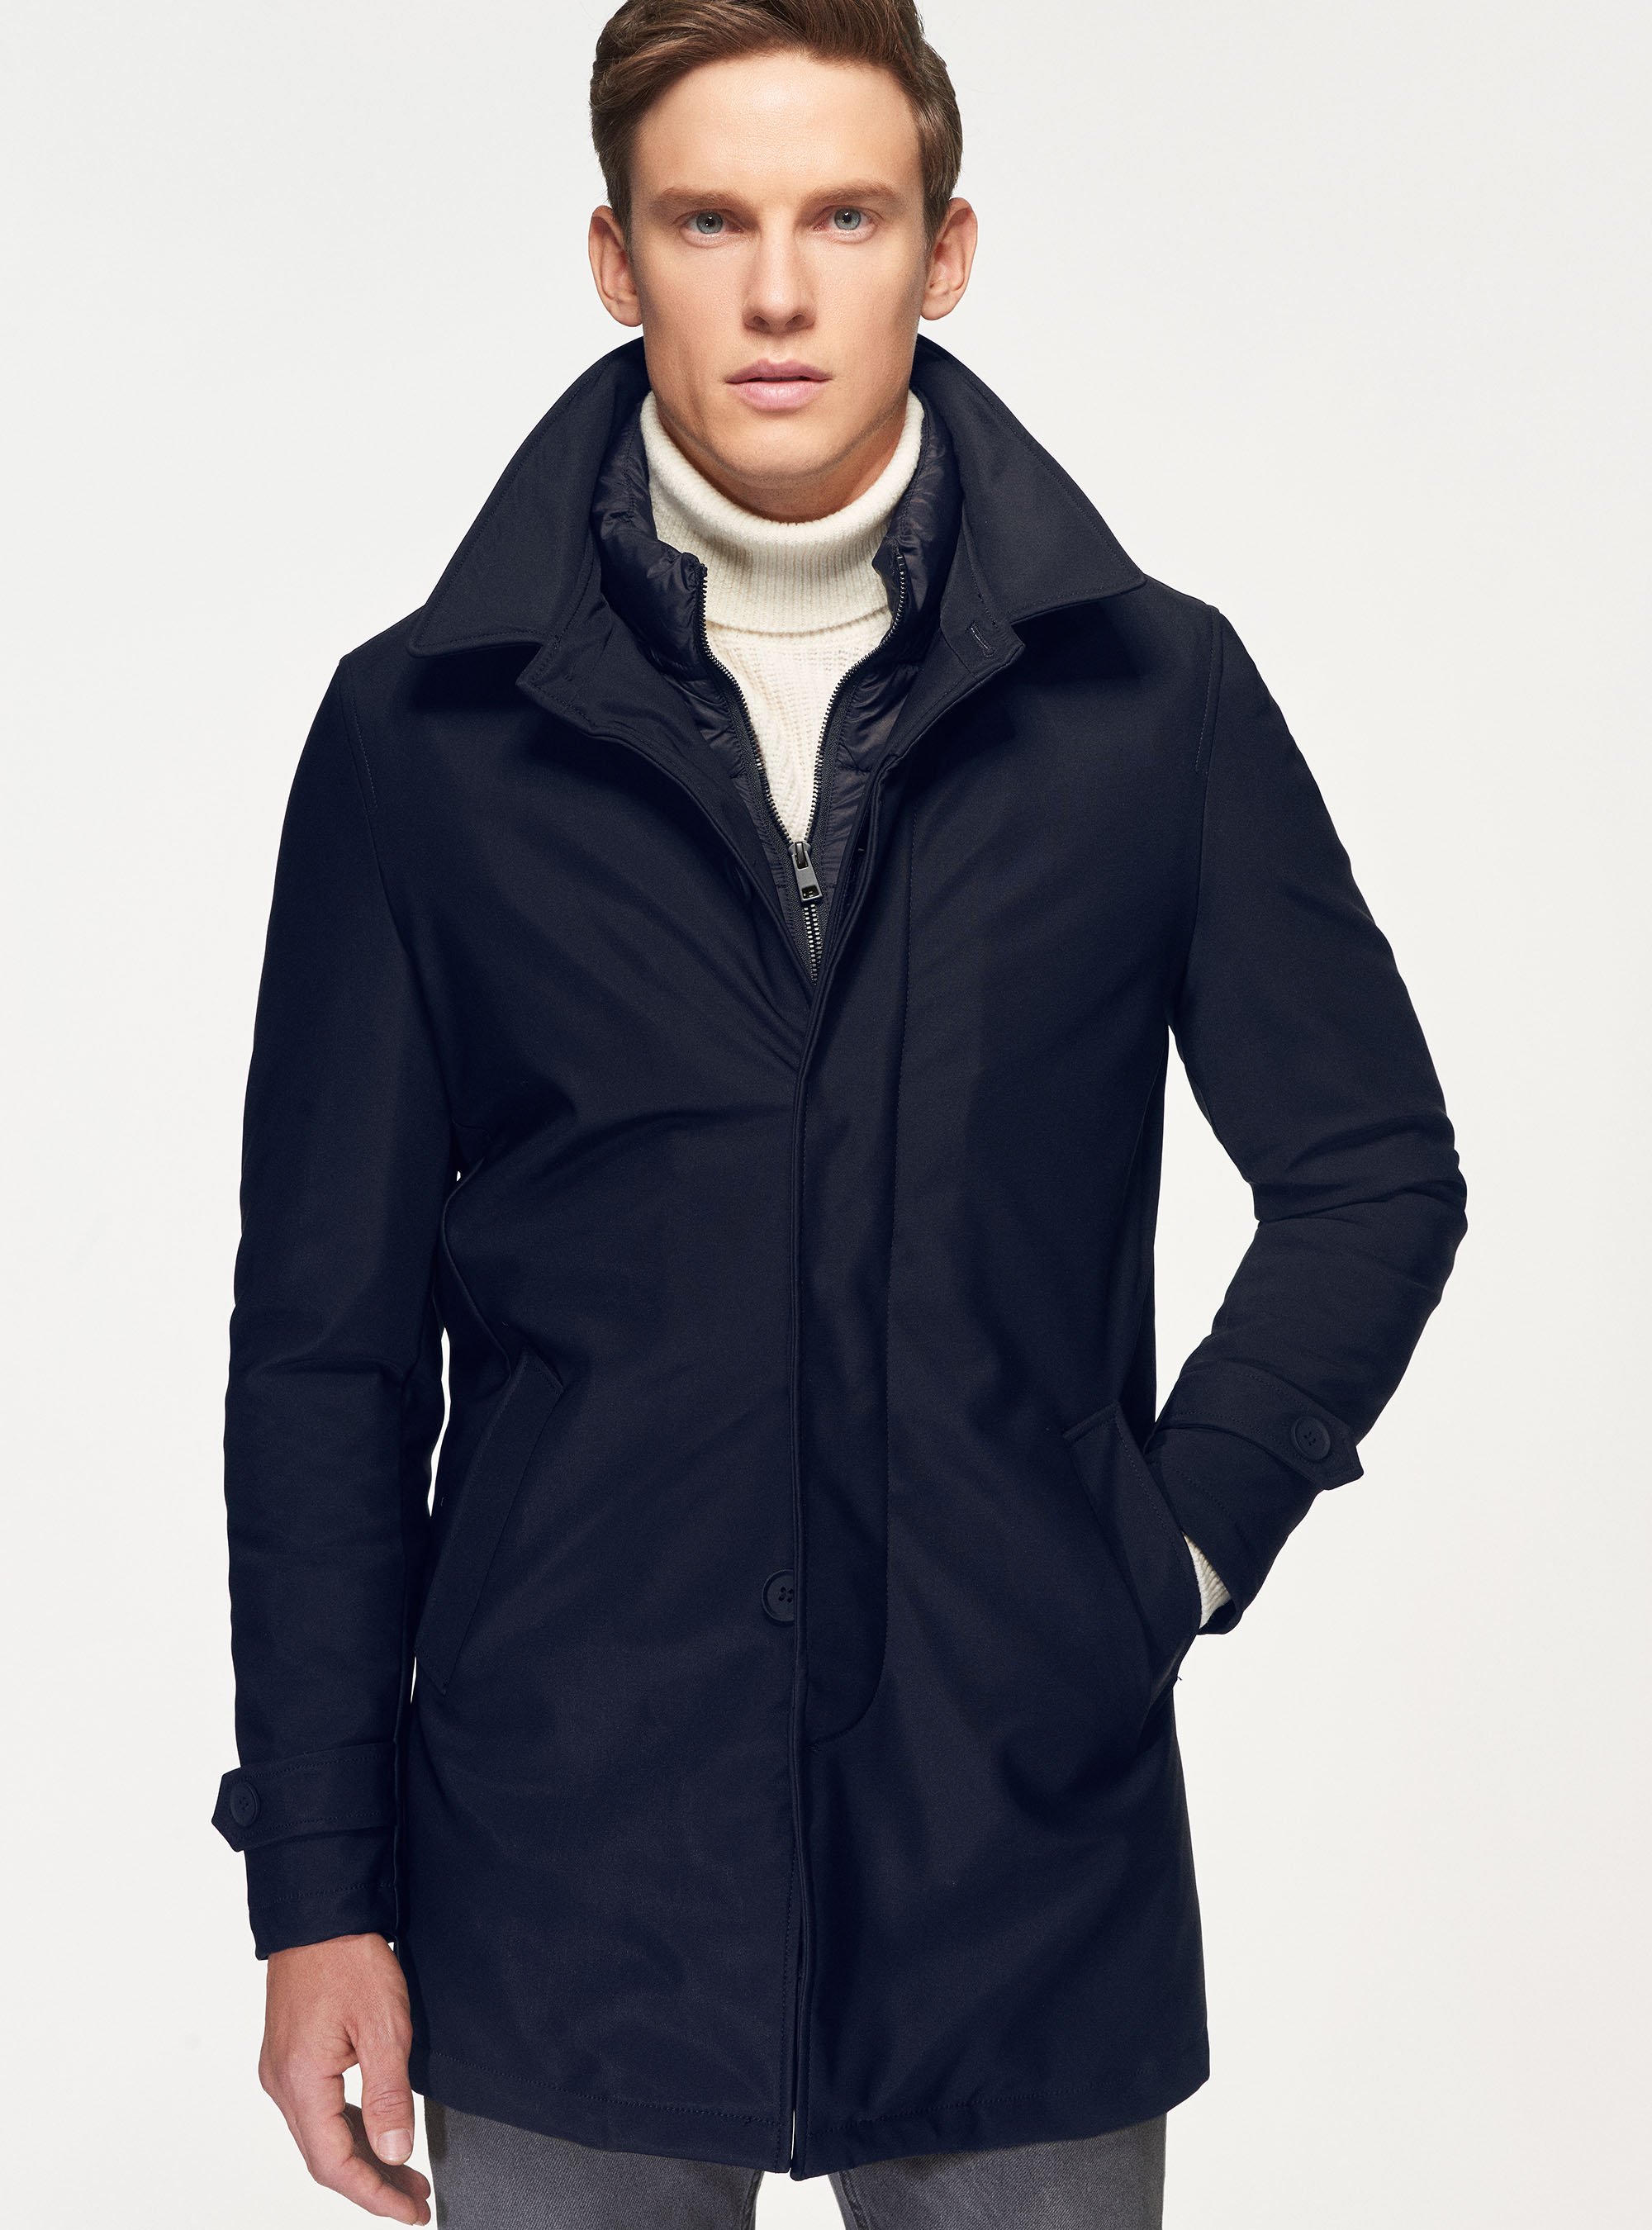 Technical fabric jacket with vest | GutteridgeEU | Men's catalog ...